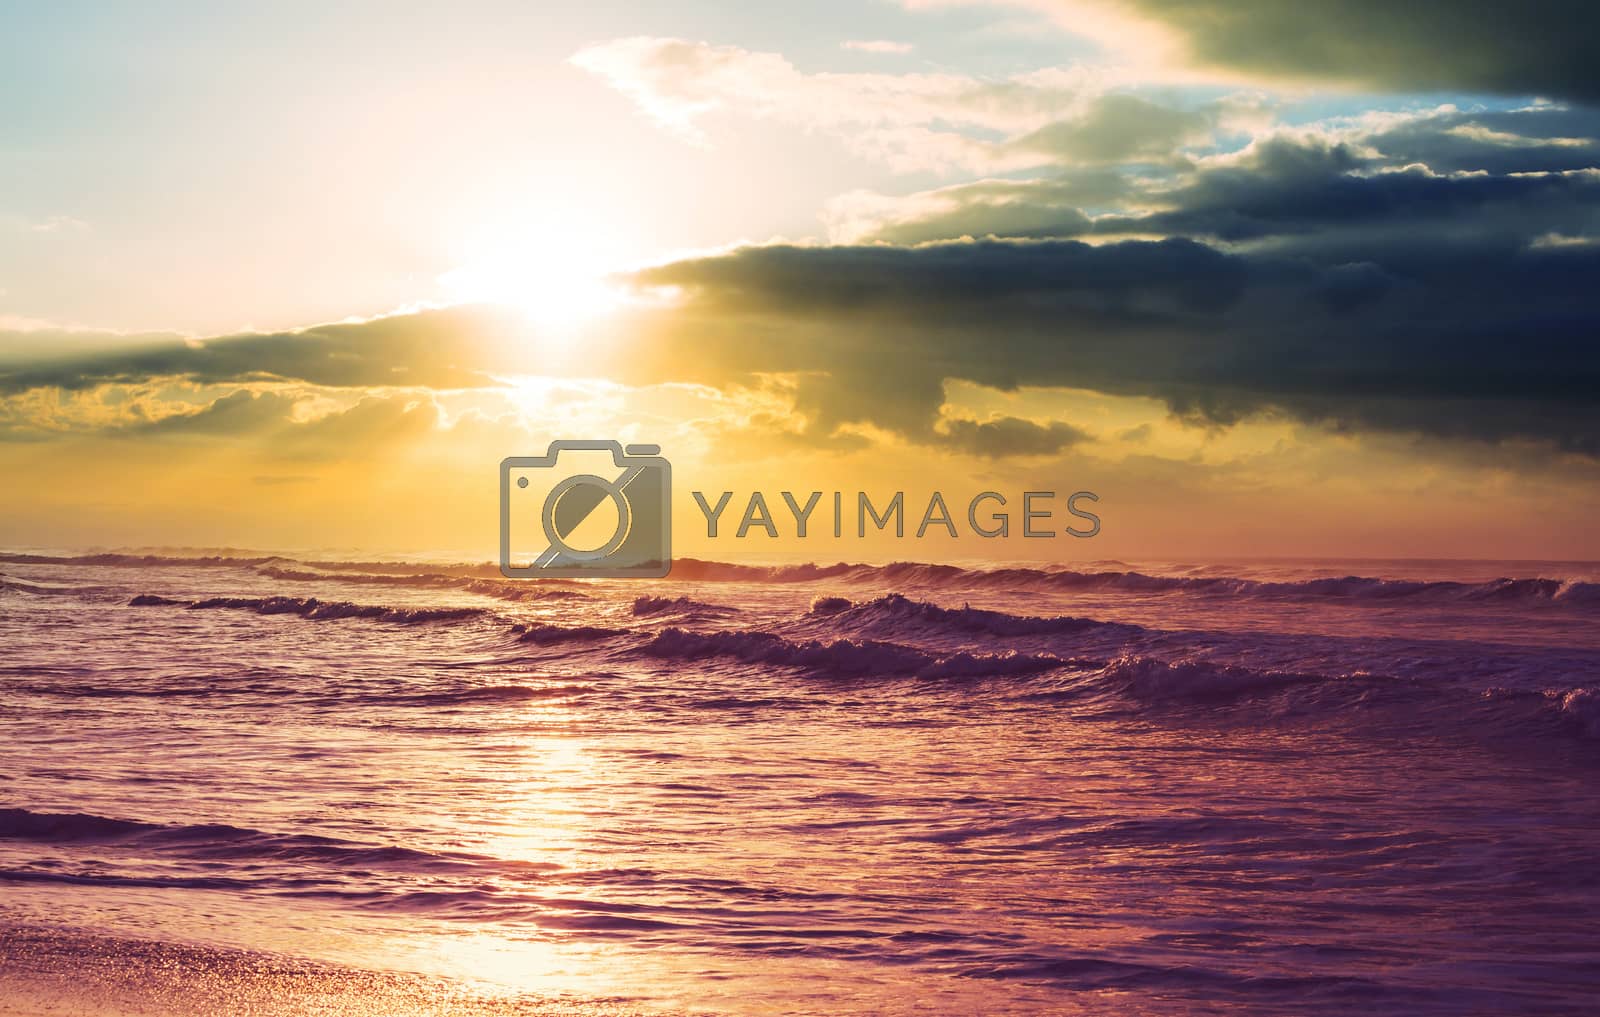 Royalty free image of Sea sunset by kamchatka